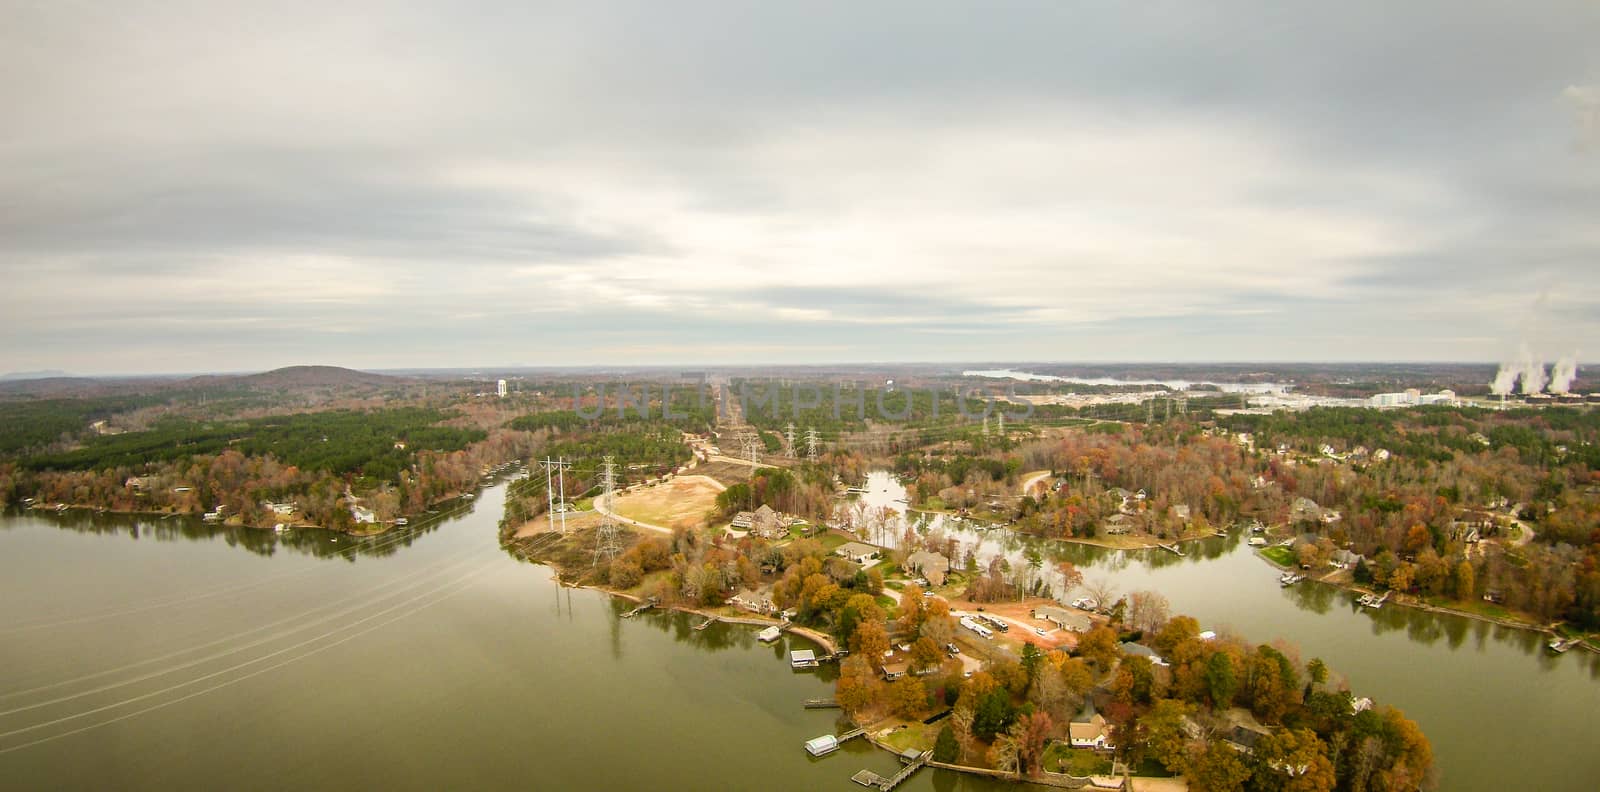 aerialview over lake wylie south carolina